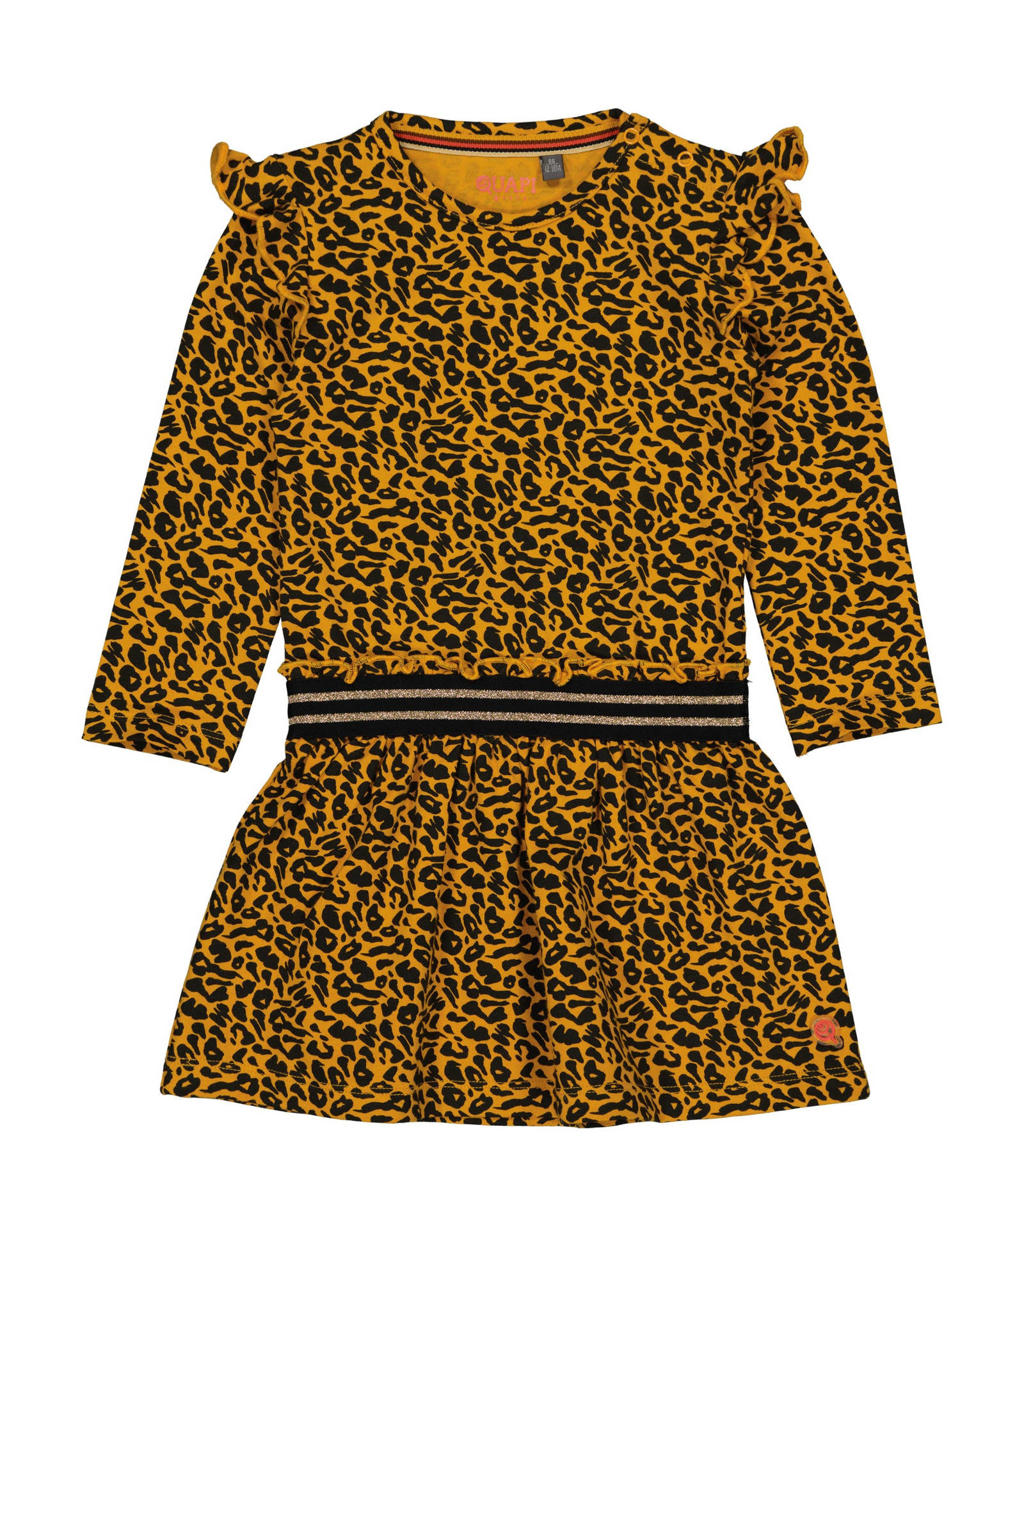 Quapi Mini jurk Sade met dierenprint en ruches geel/zwart